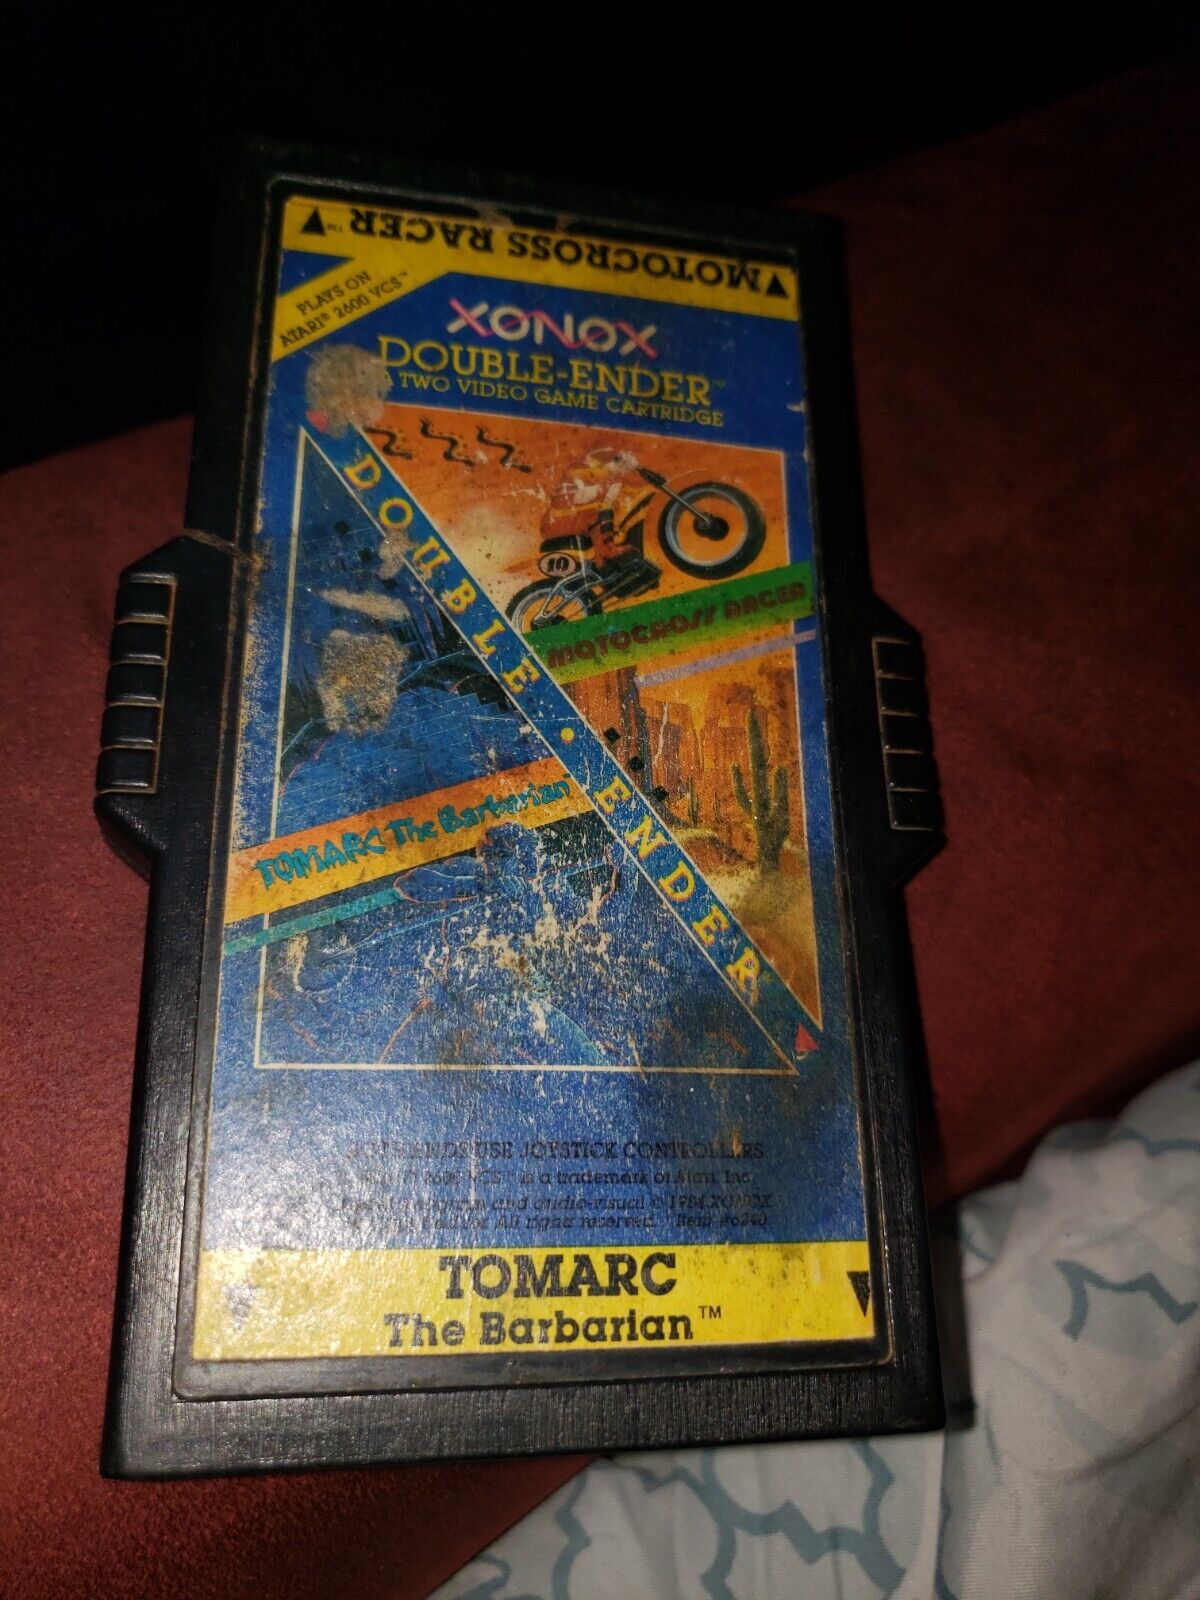 NTSC R9 Motocross Racer Tomarc The Barbarian - Atari 2600 Xonox Double-Ender nes